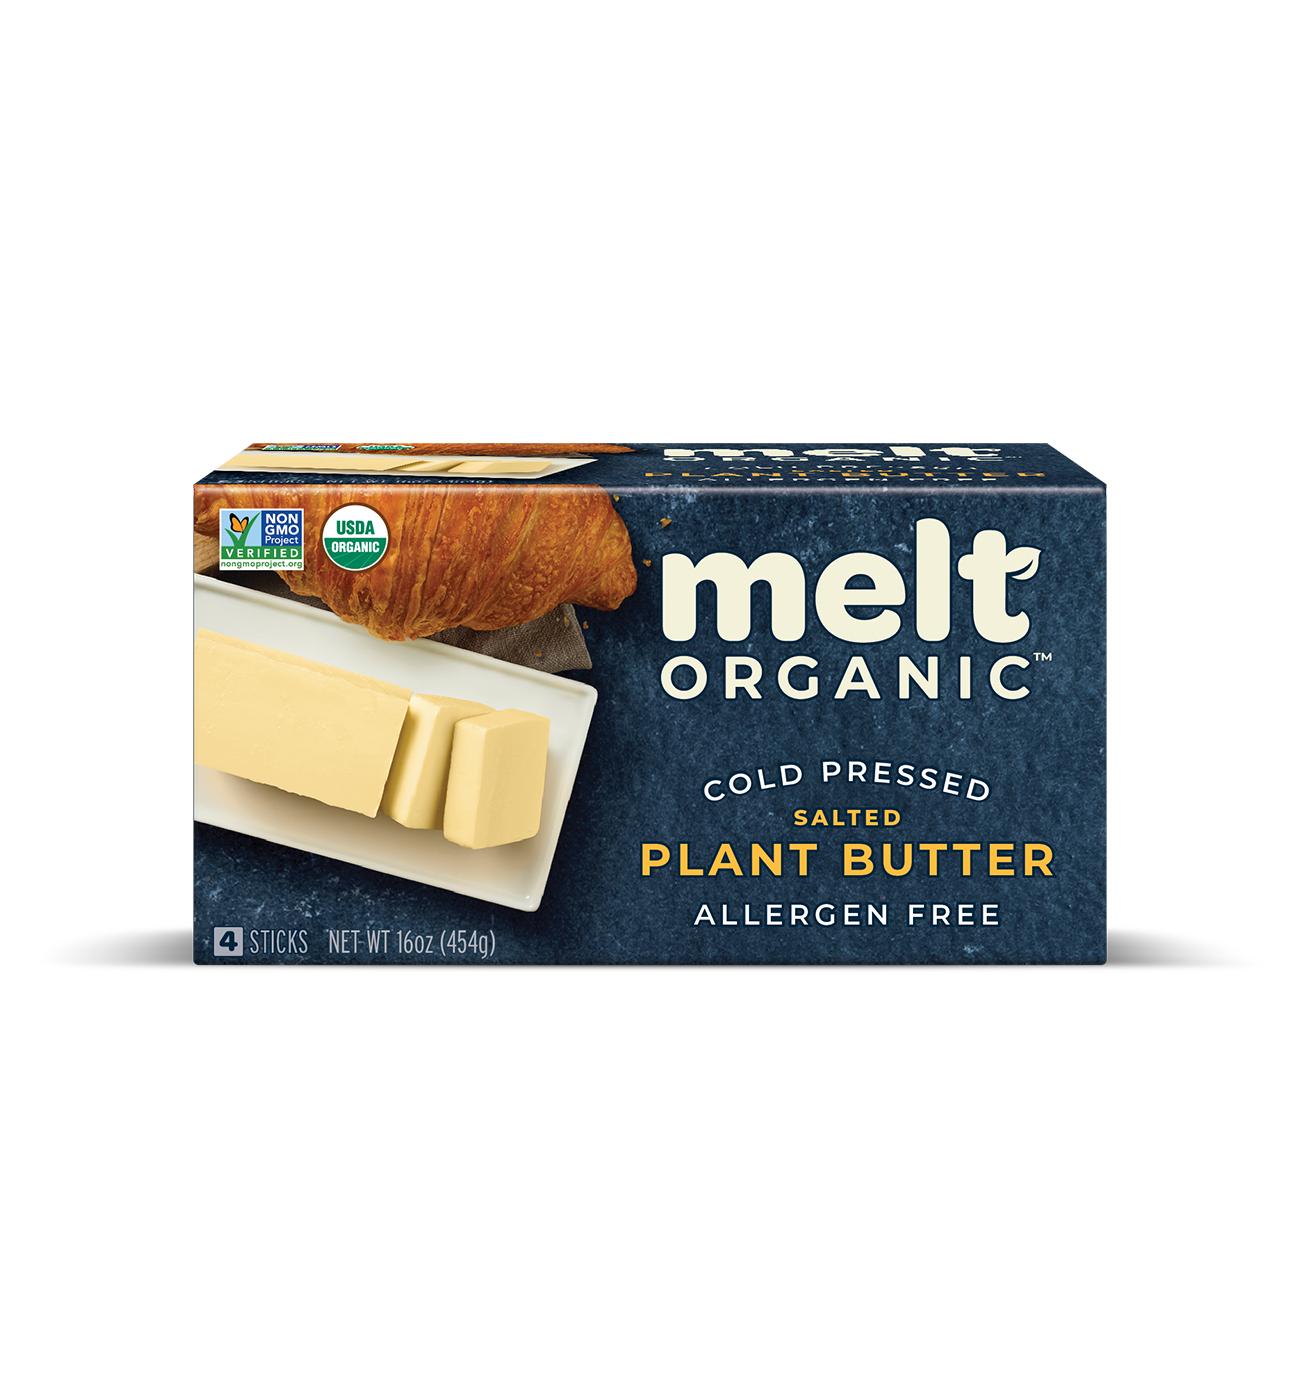 MELT ORGANIC Organic Buttery Sticks; image 1 of 3